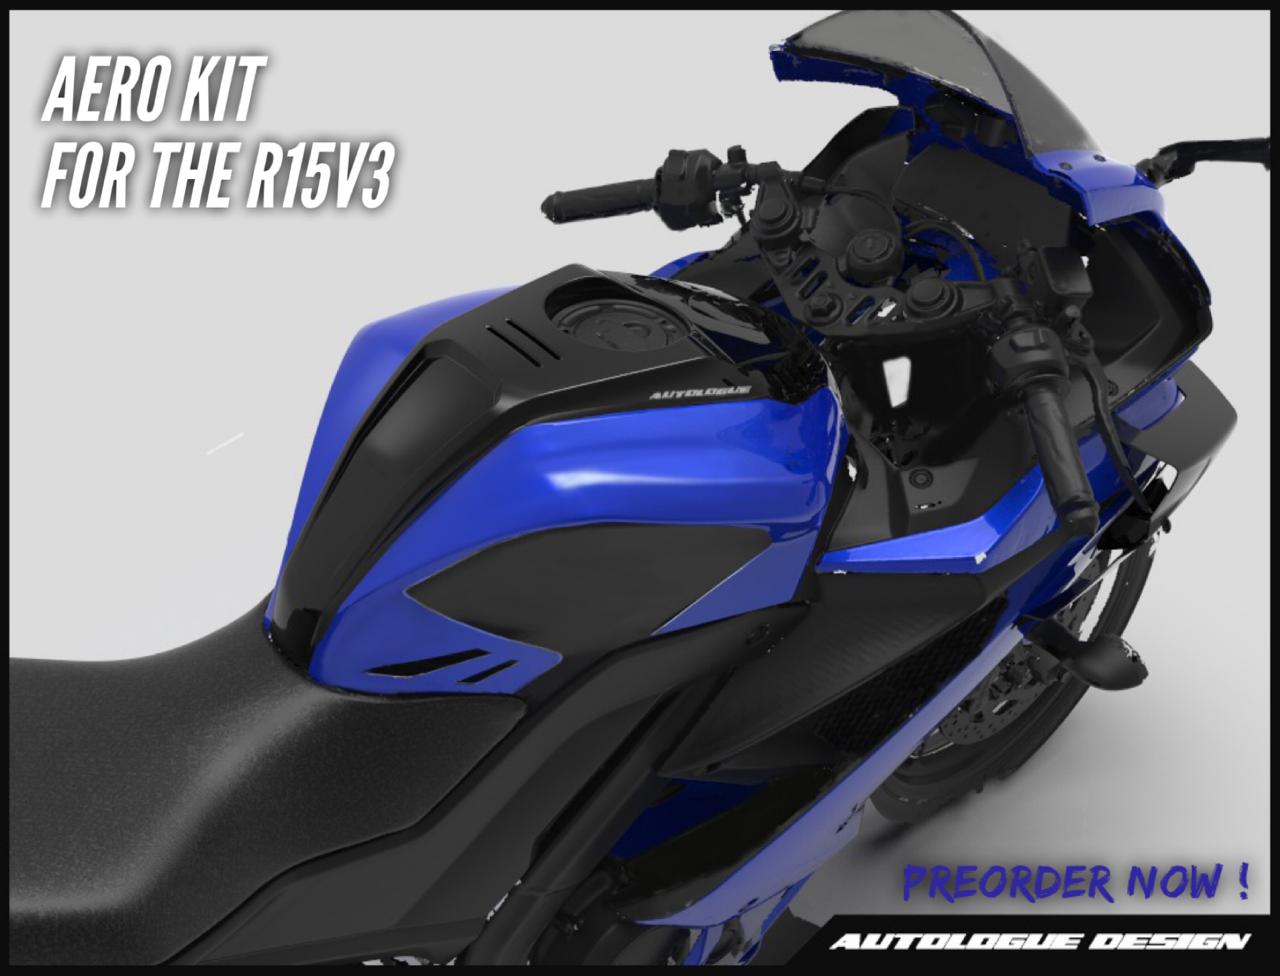 Indian Firm Introduces Moto GP-Style Yamaha R15 V3 Aero Kit